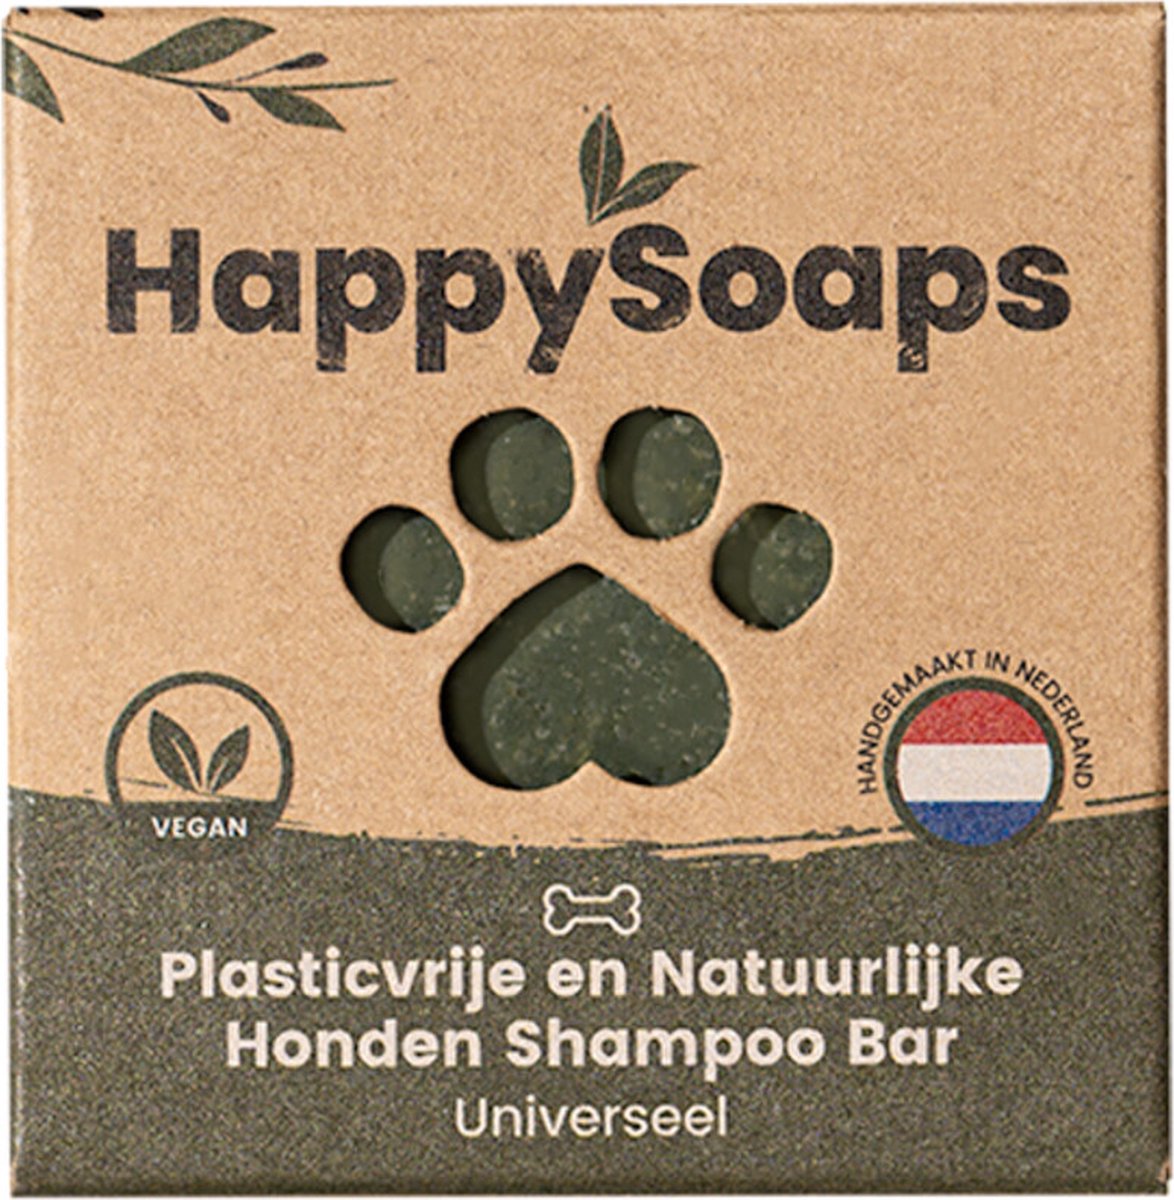 6x HappySoaps Honden Shampoo Bar Universeel 70 gr